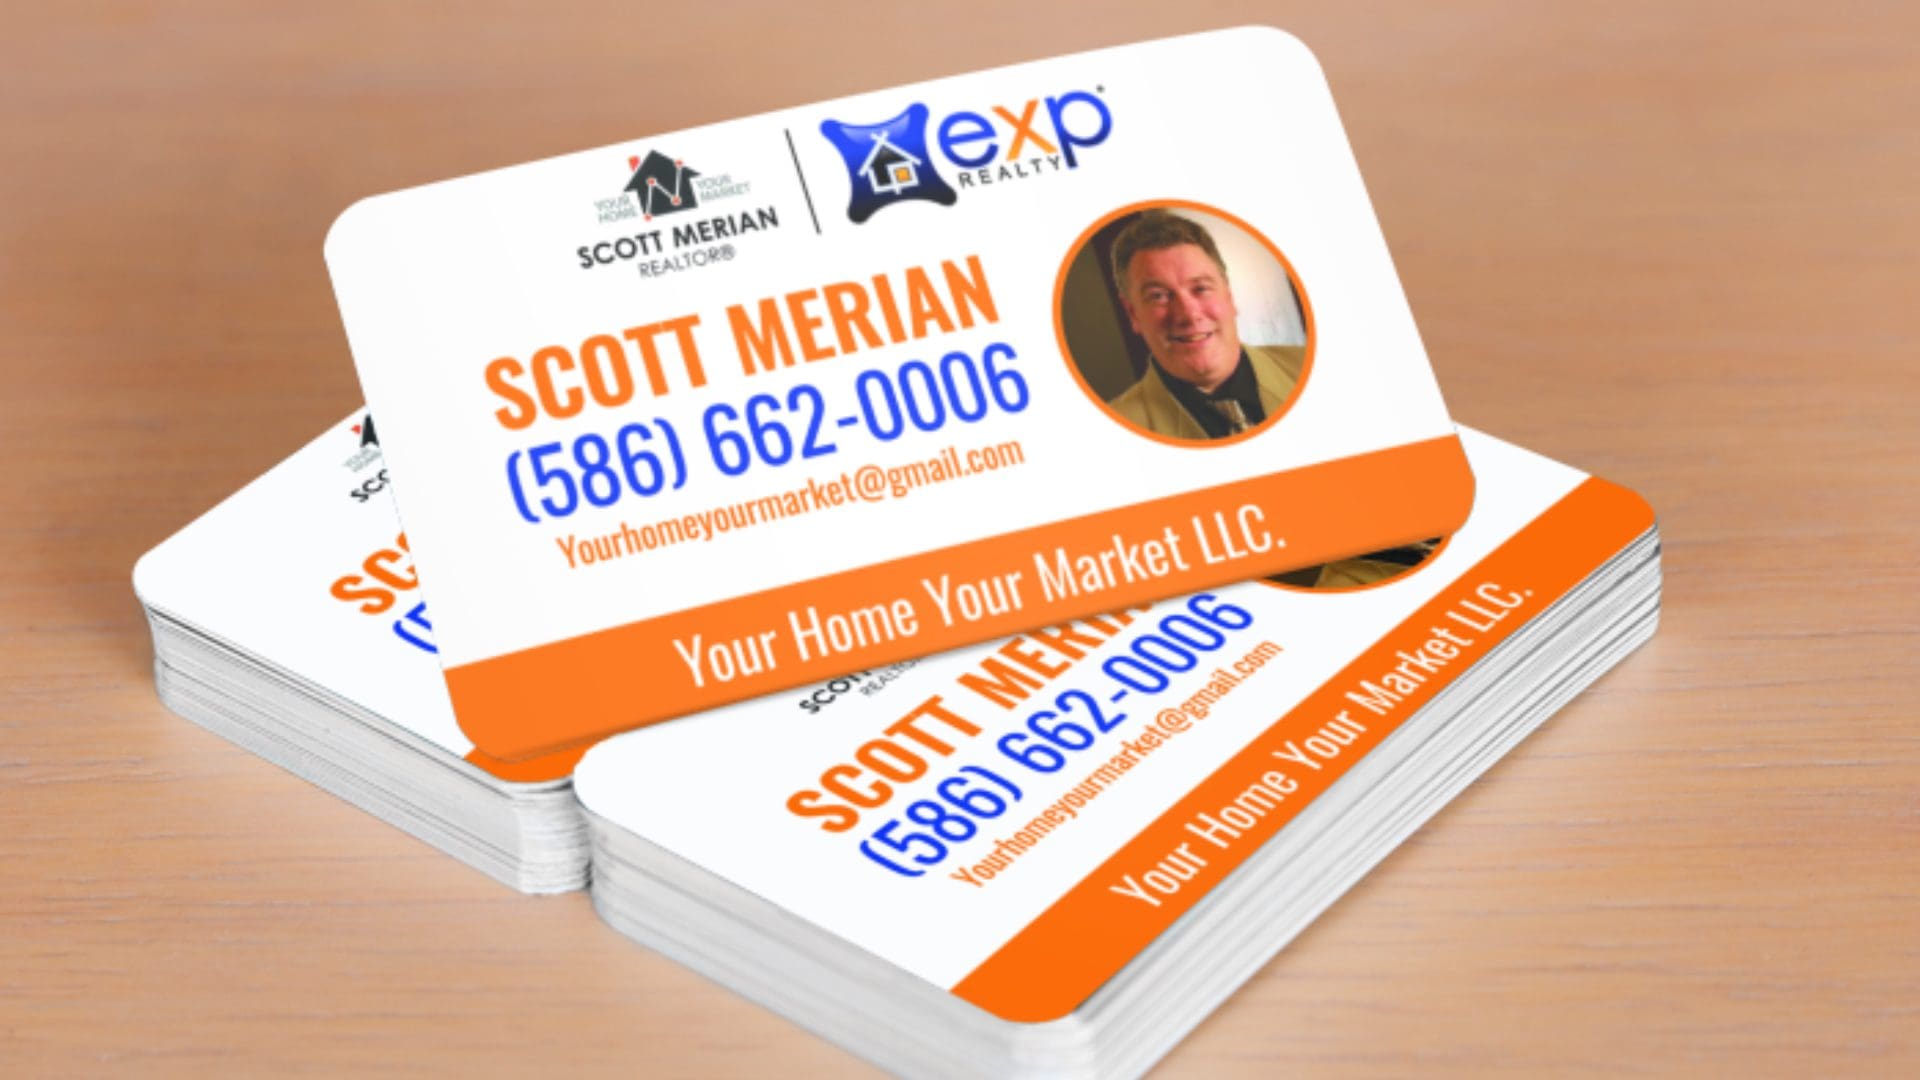 Your Home Your Market LLC - Scott Merian's Cards (6)